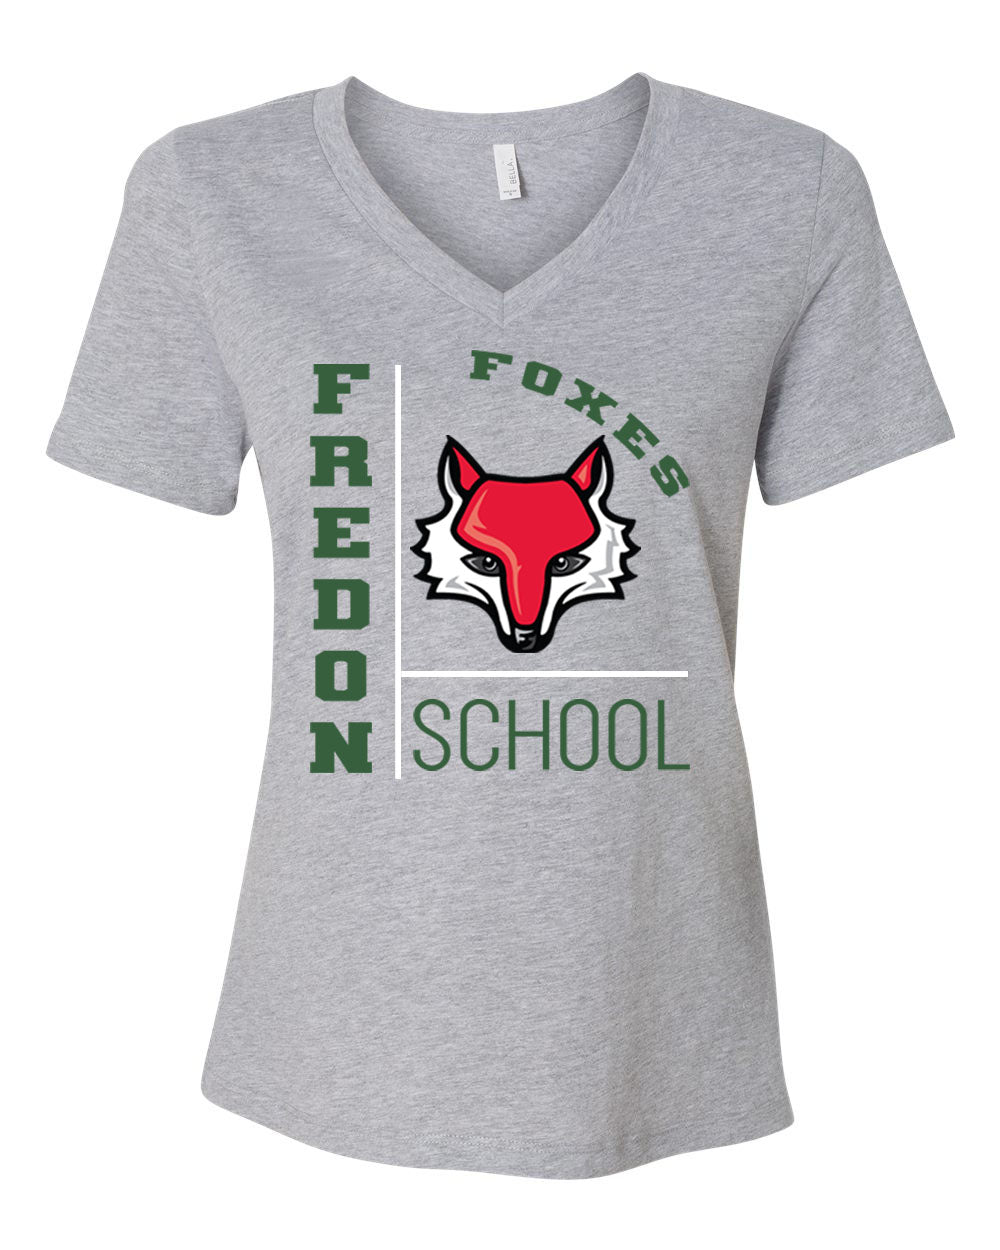 Fredon Design 2 V-neck T-shirt